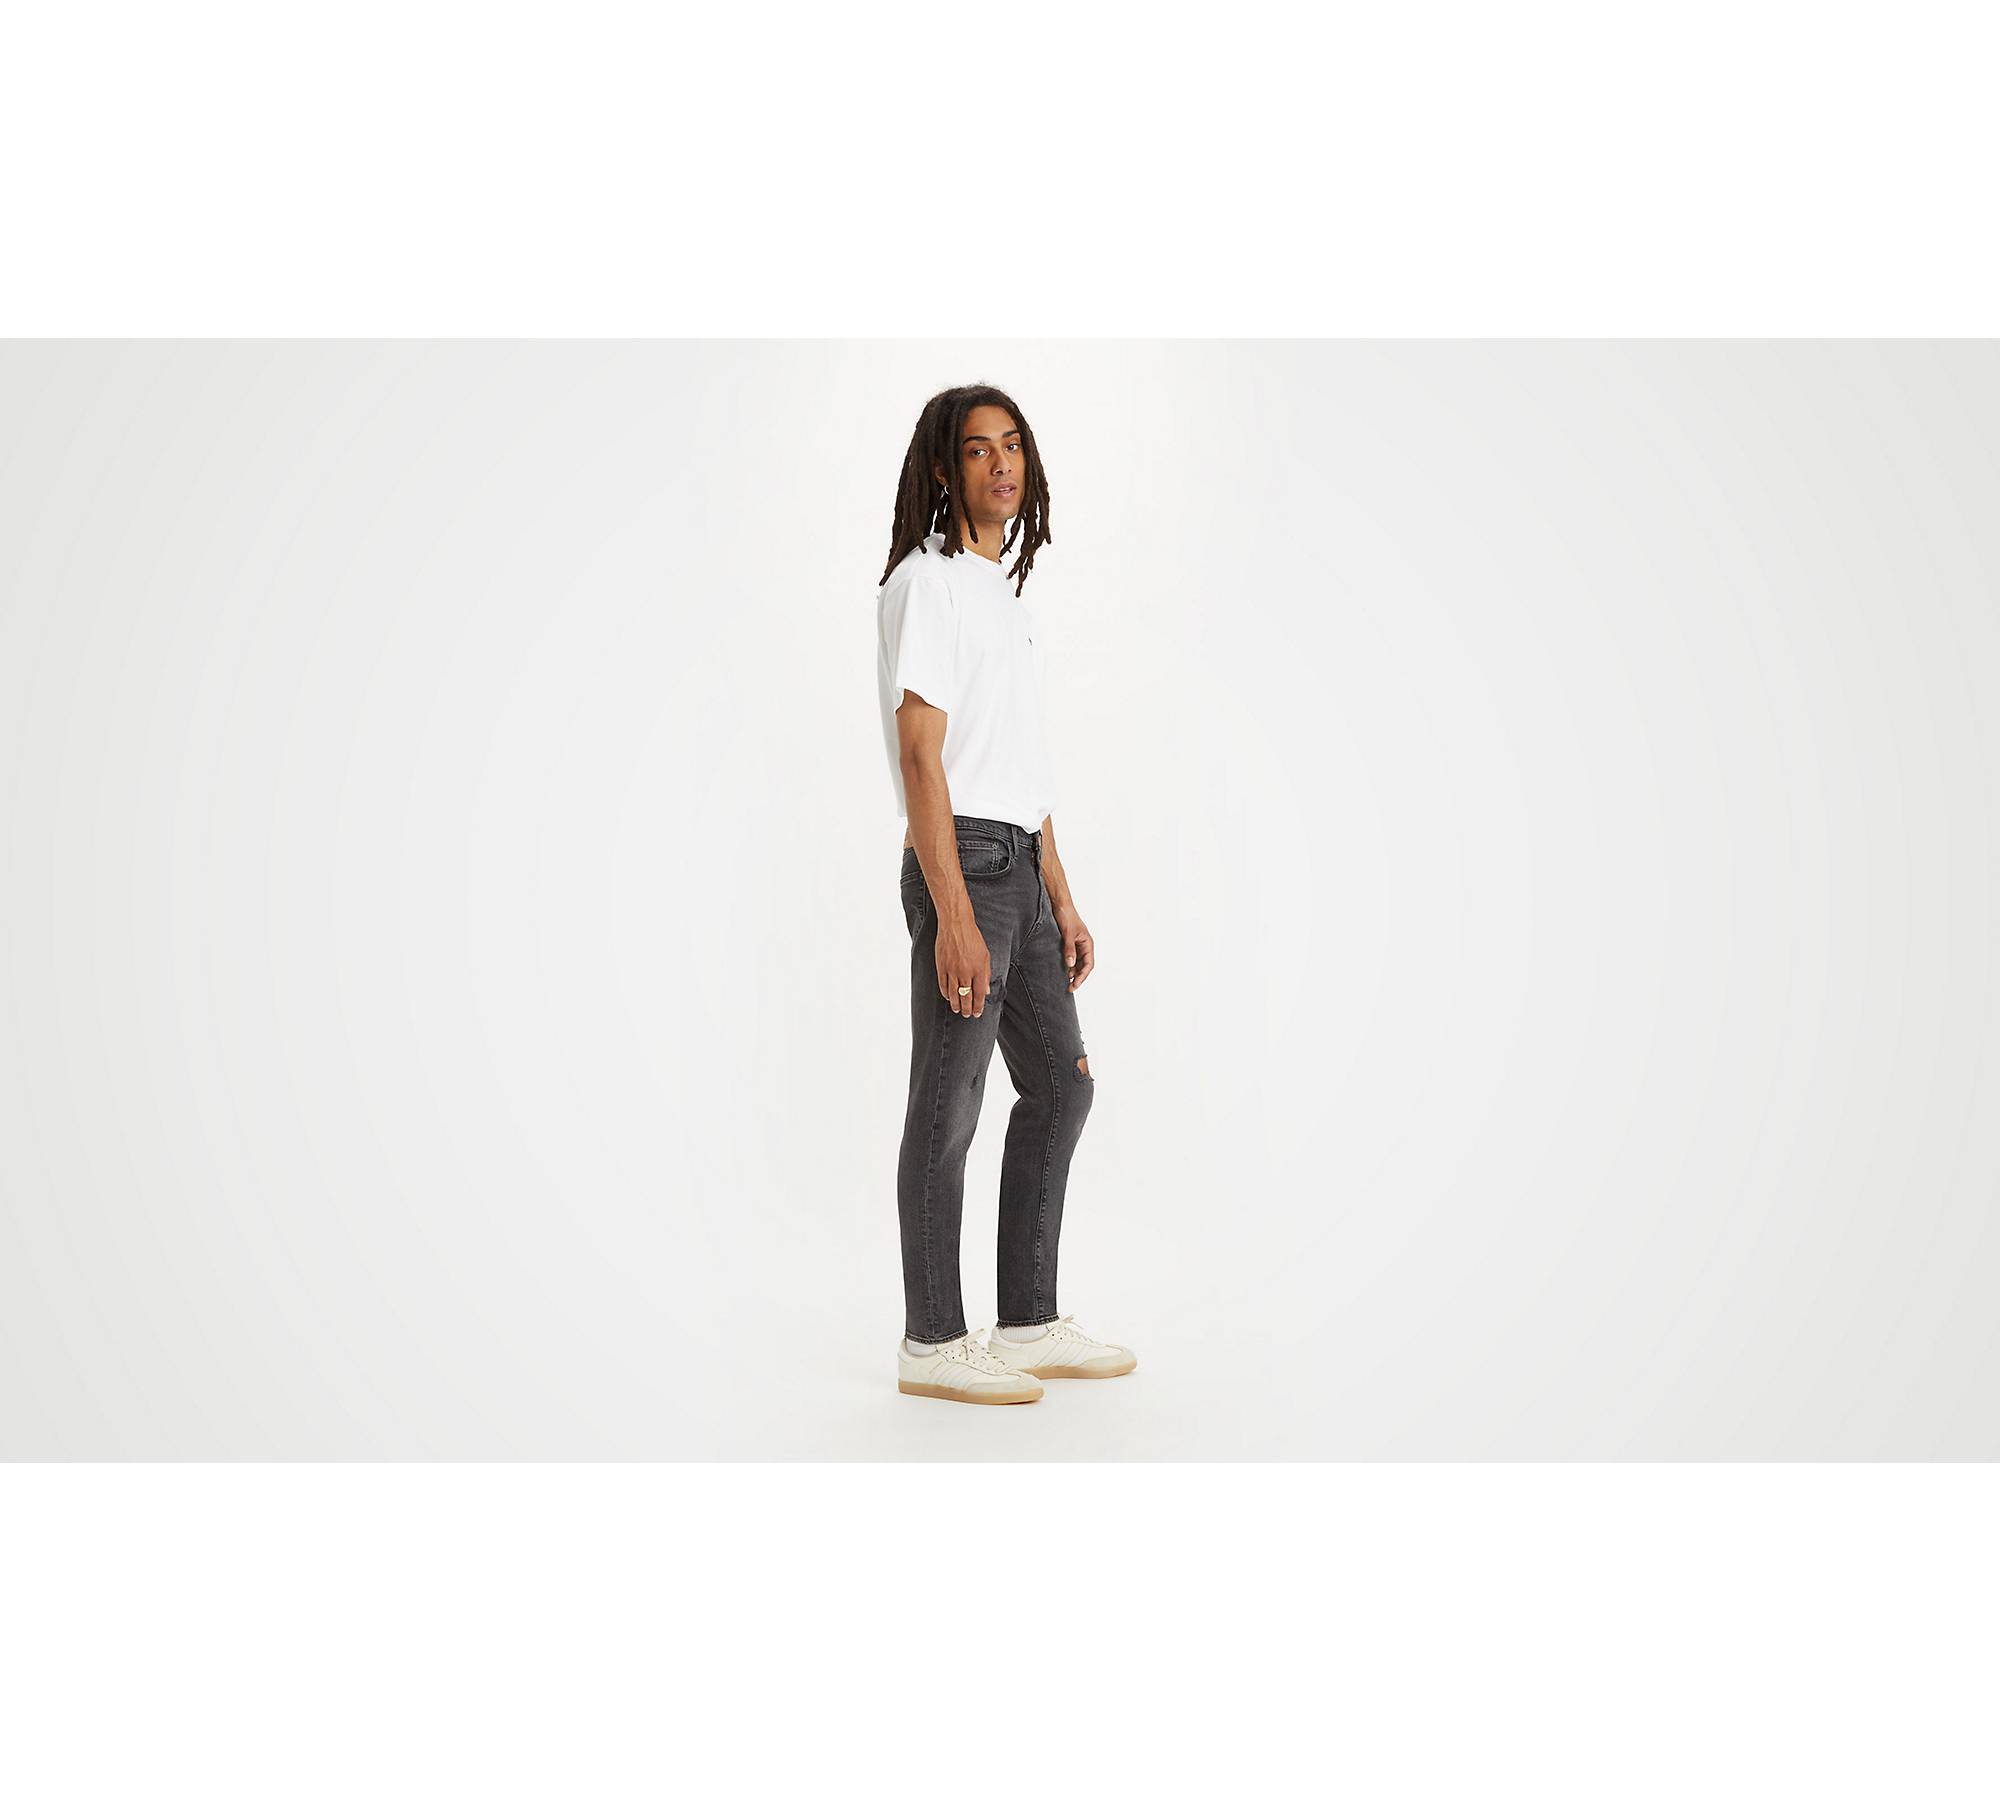 512™ Slim Taper Fit Men's Jeans - Black | Levi's® US